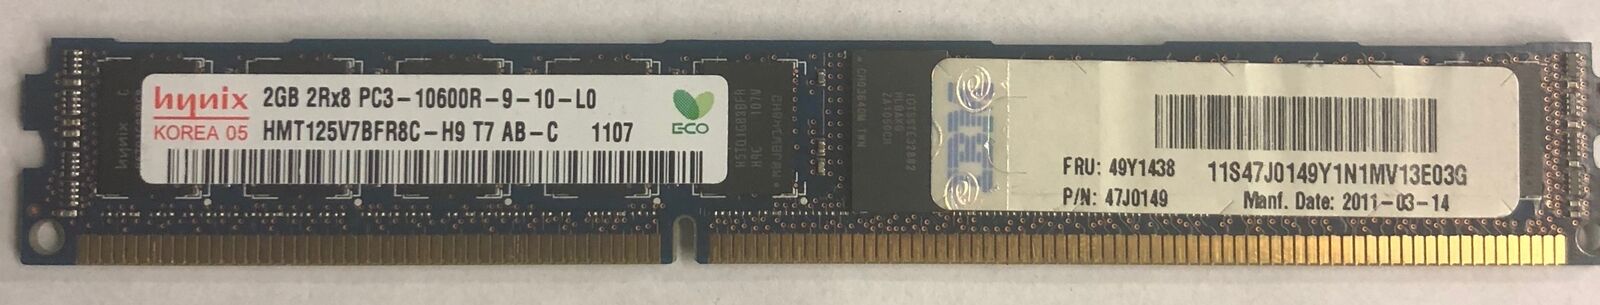 Hynix HMT125V7BFR8C-H9 2GB DDR3 Server RAM Memory- 5 Pack